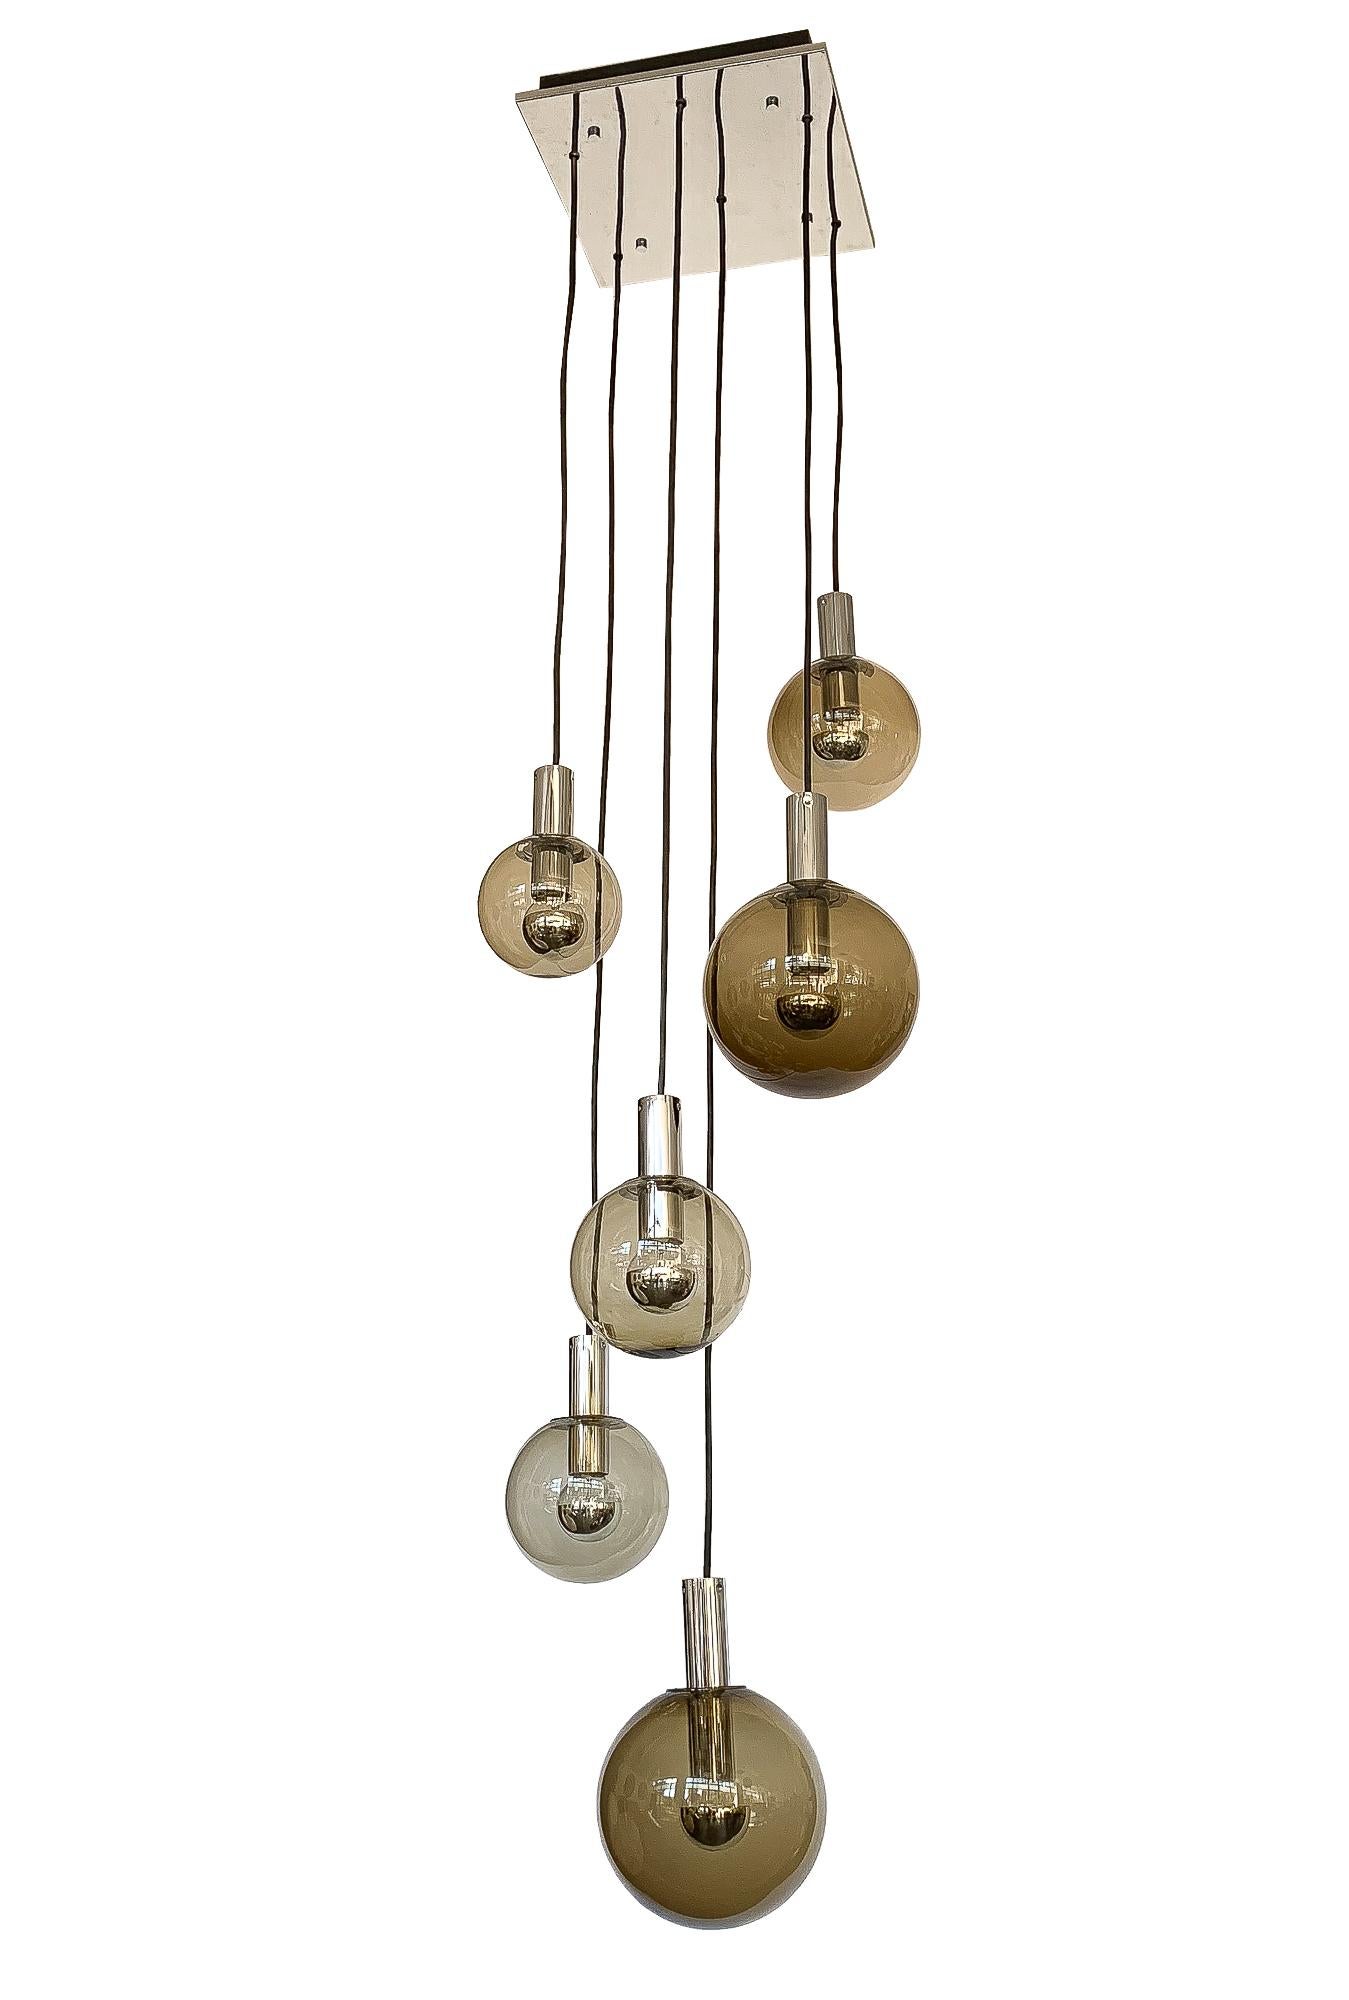 RAAK six globe cascading pendant chandelier. Six smoked blown glass globes in 3 sizes: 6